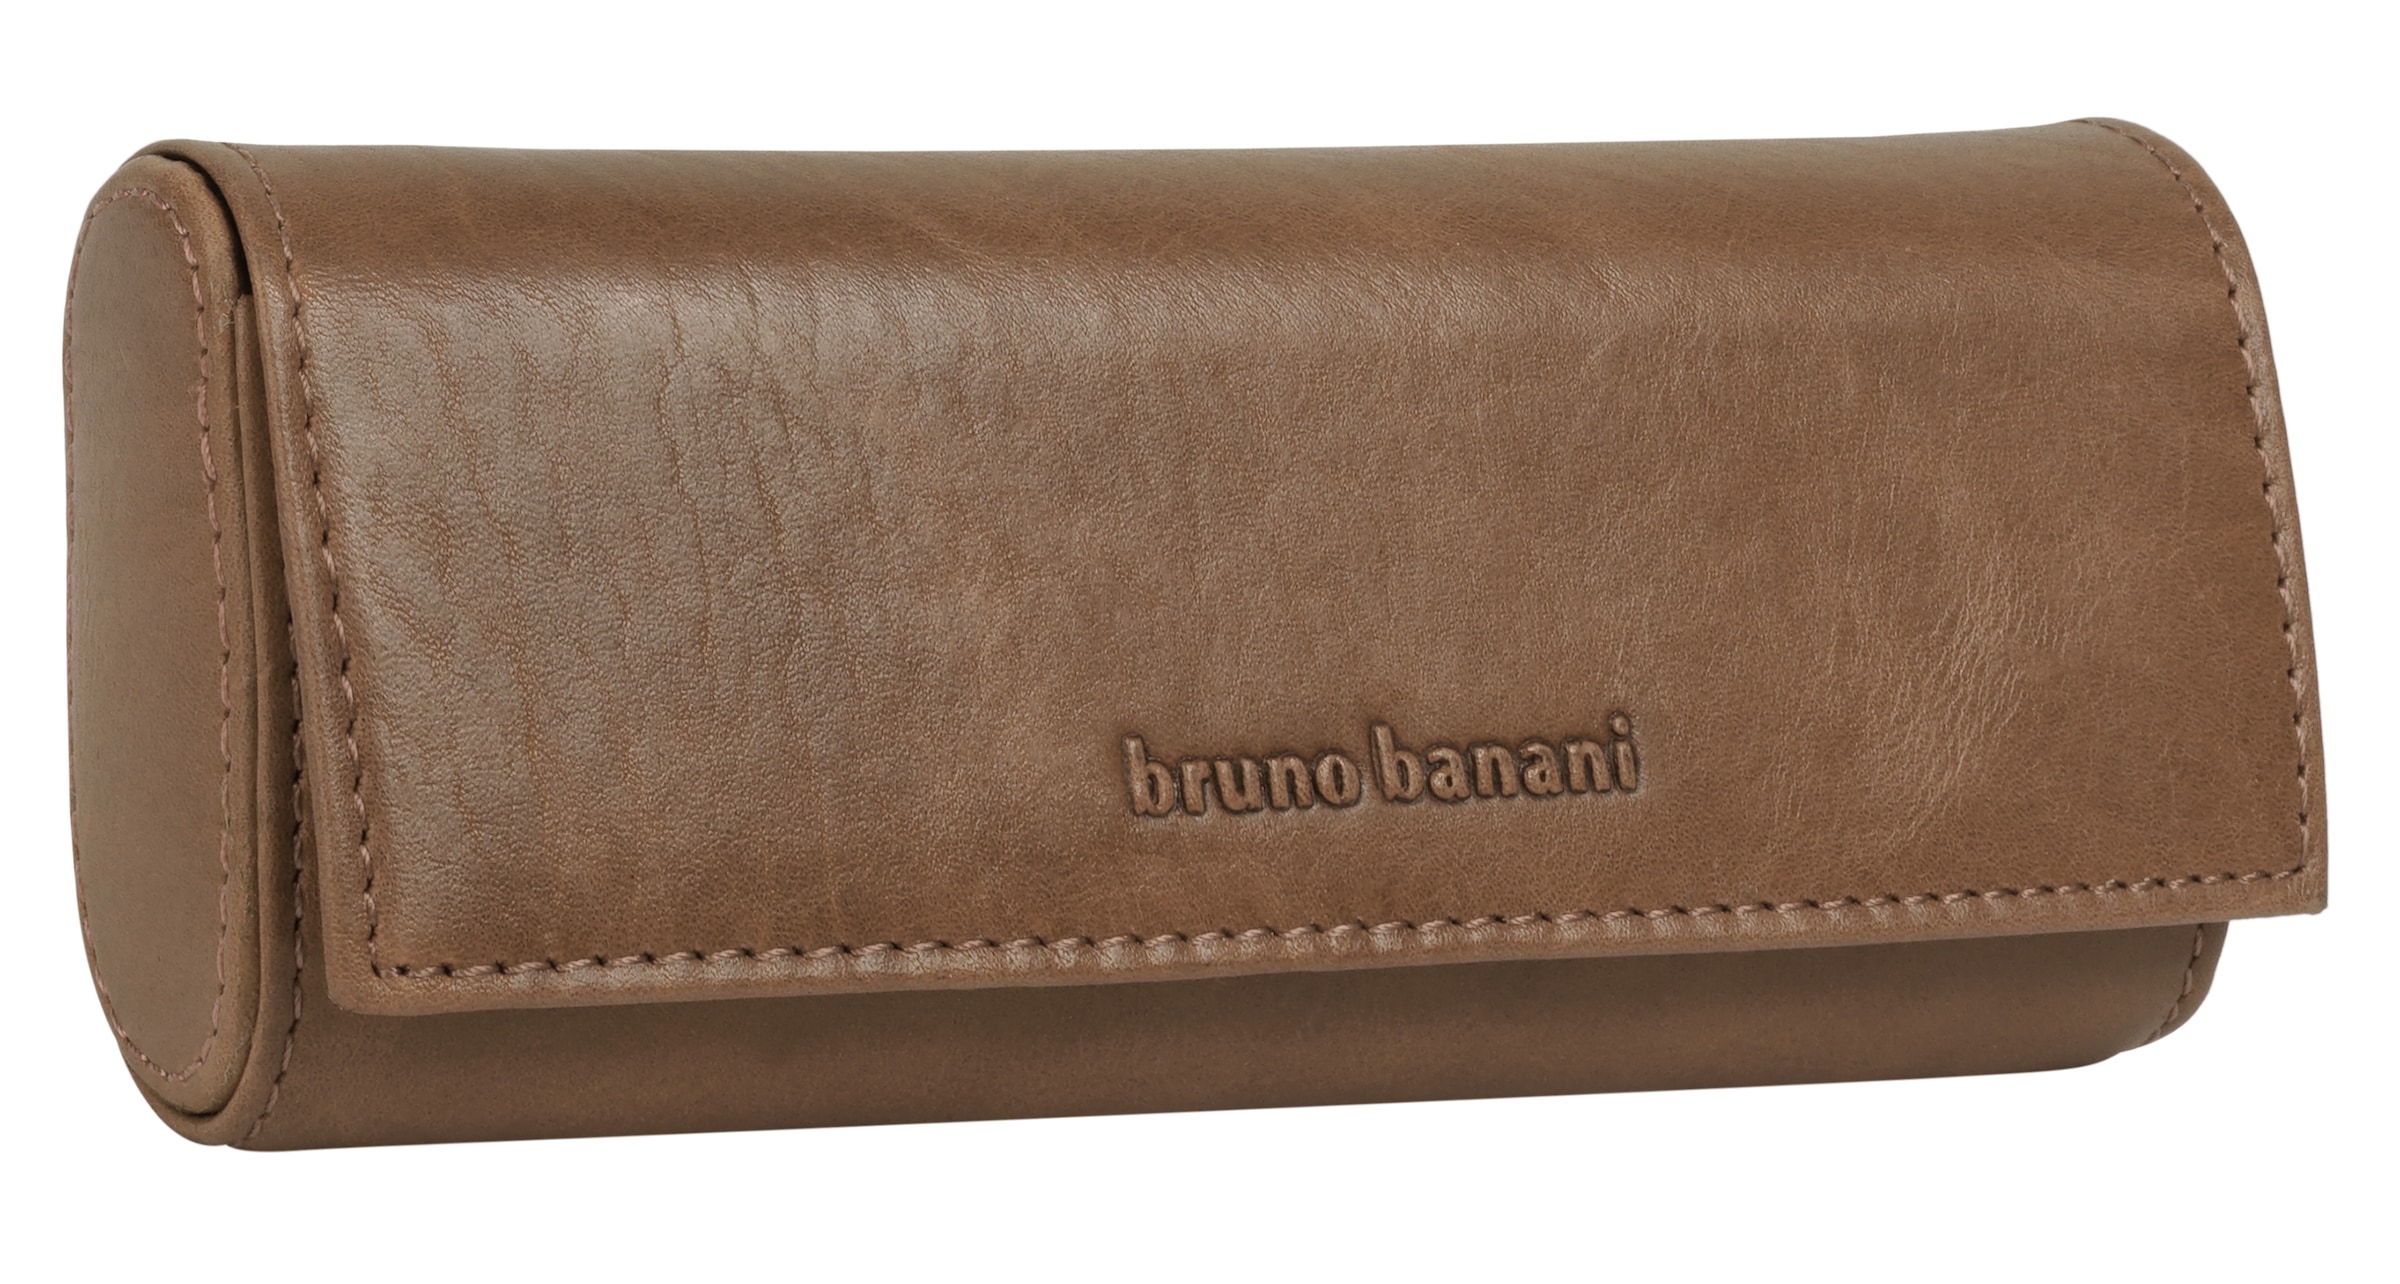 Bruno Banani Brustbeutel, echt Leder online kaufen